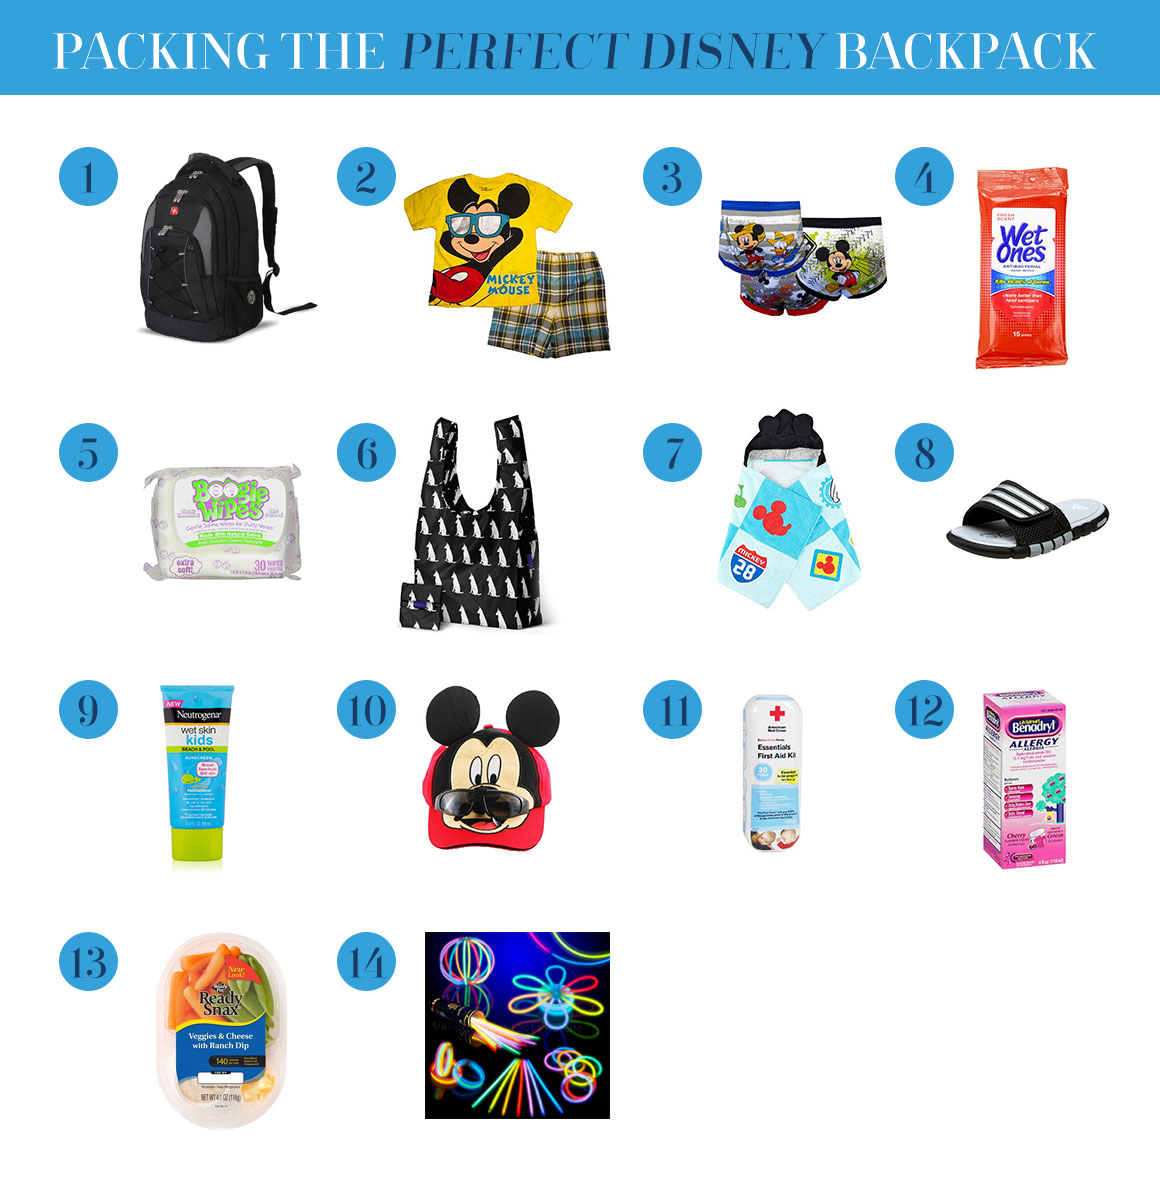 DISNEY TRAVEL ESSENTIALS - disney packing essentials, tips, park bag items,  park must haves & more! 